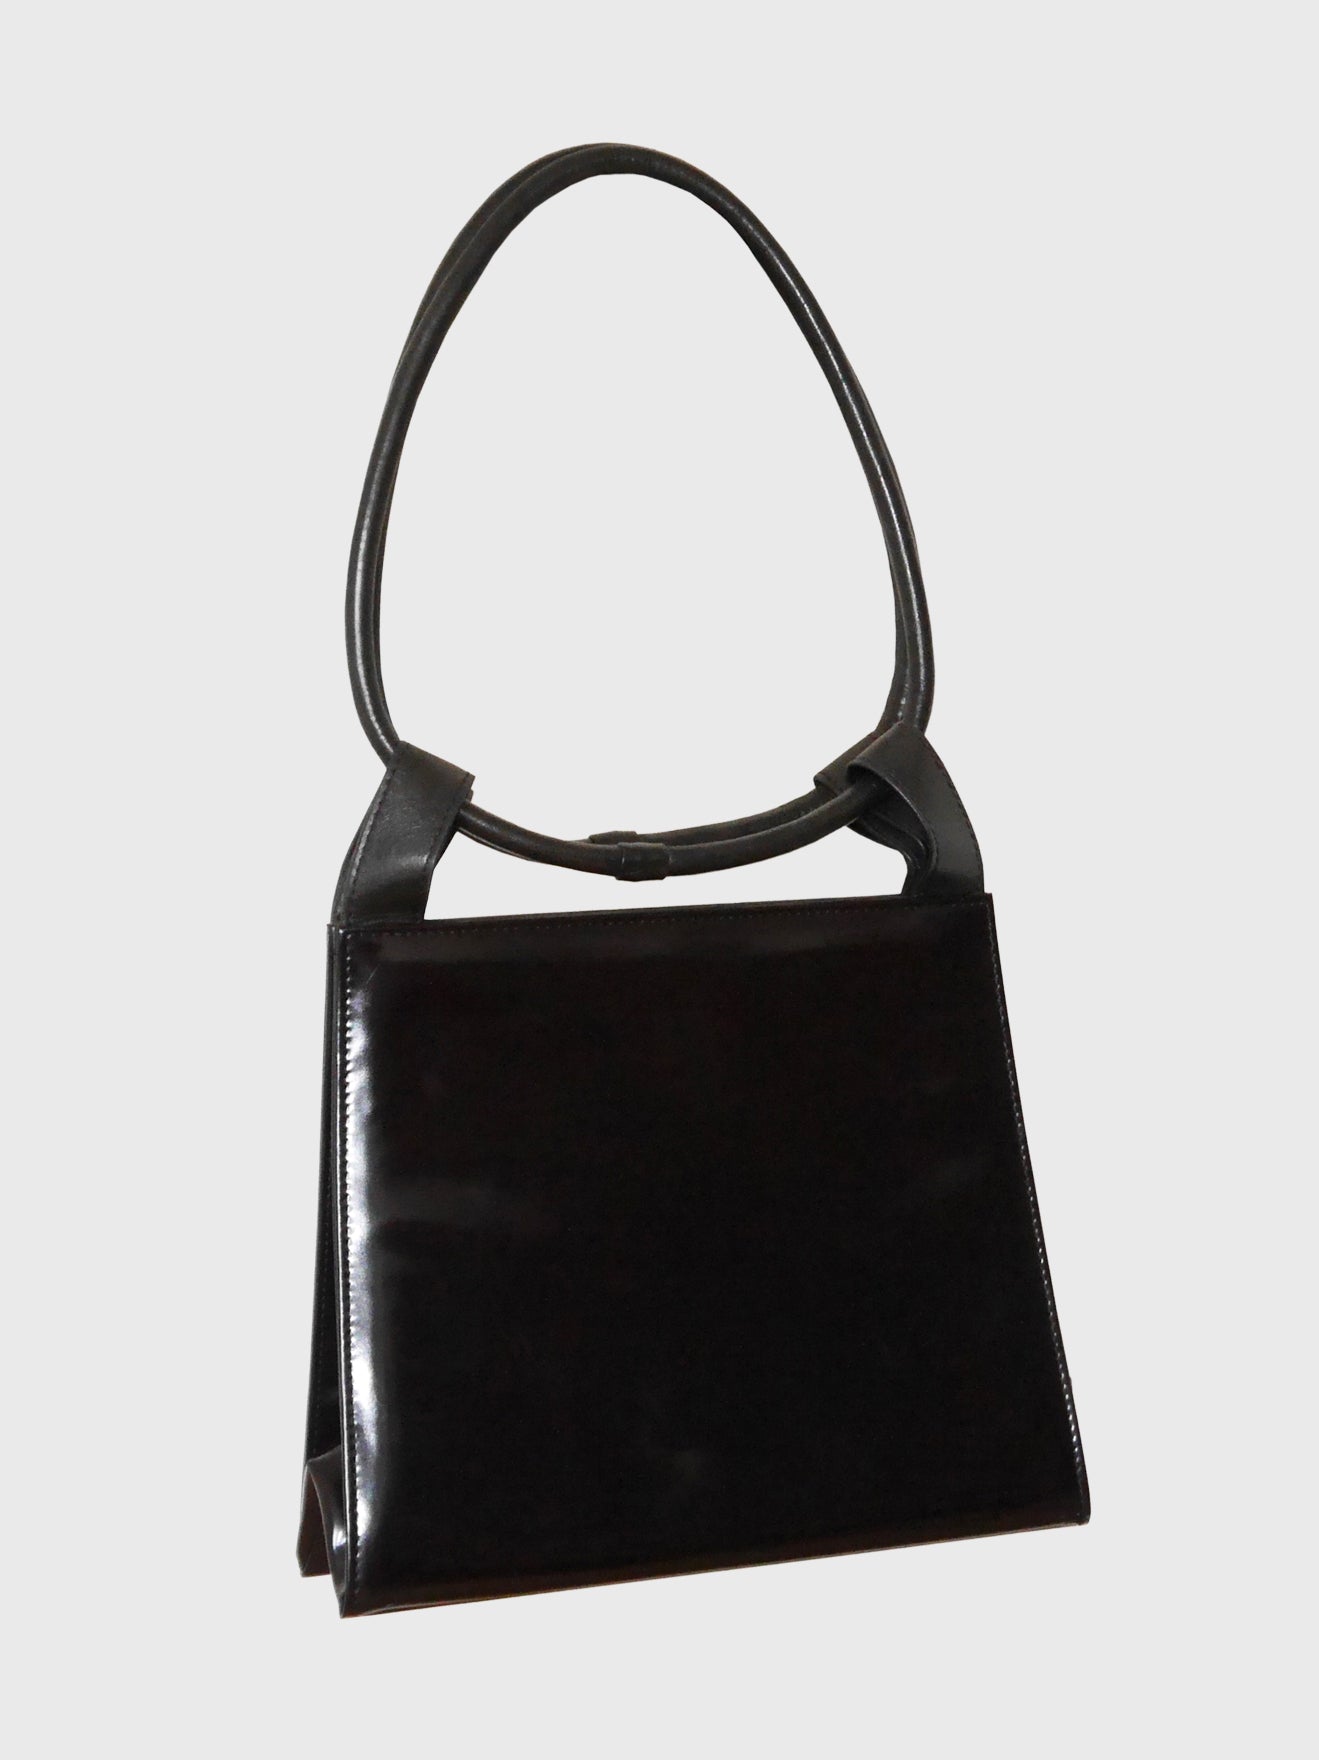 YVES SAINT LAURENT Rare Vintage Dark Brown Patent Leather Handbag